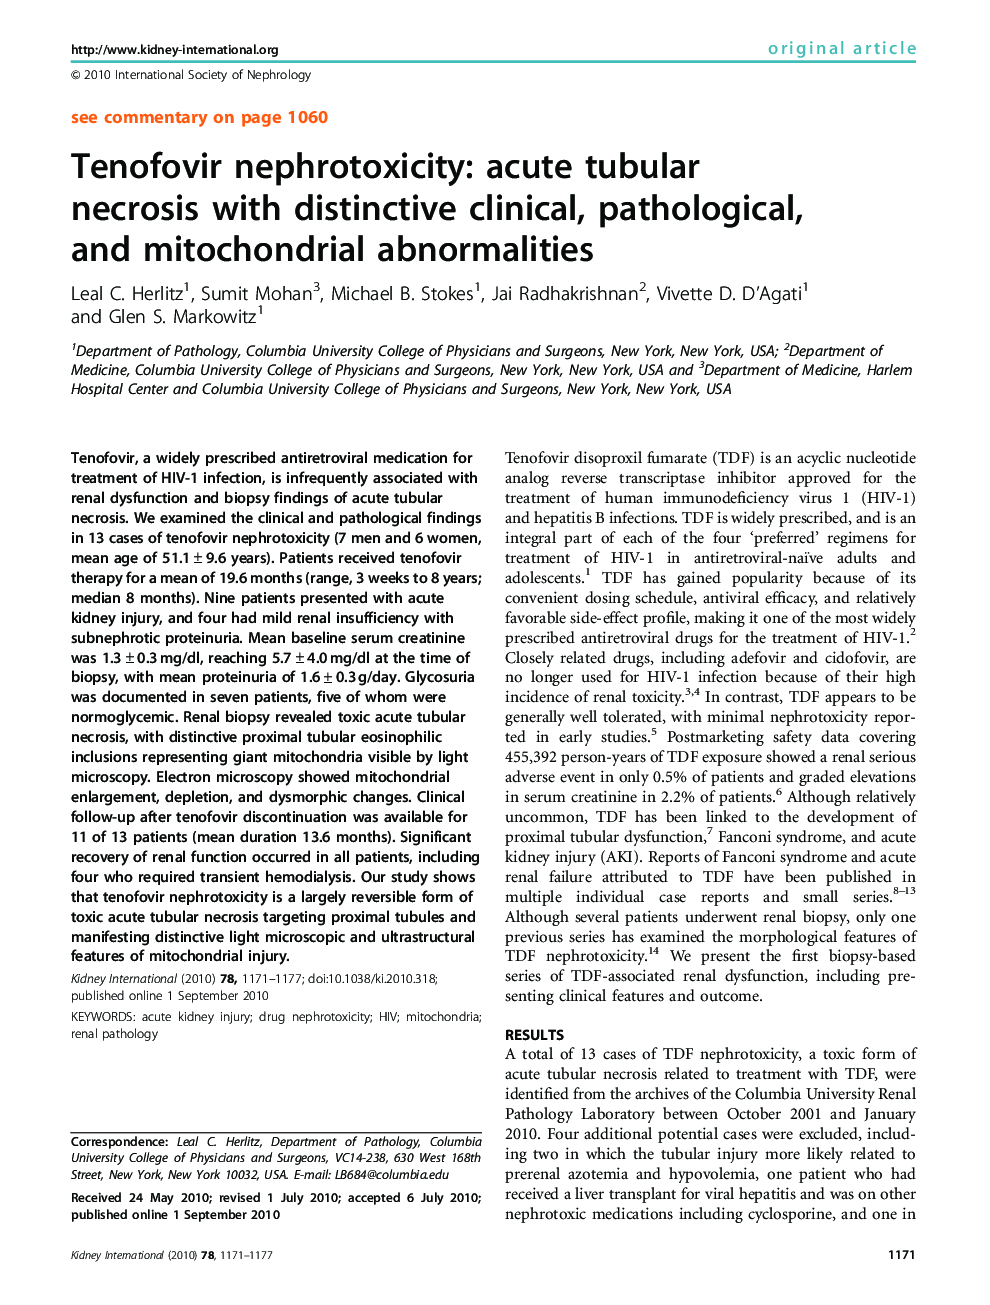 Tenofovir nephrotoxicity: acute tubular necrosis with distinctive clinical, pathological, and mitochondrial abnormalities 